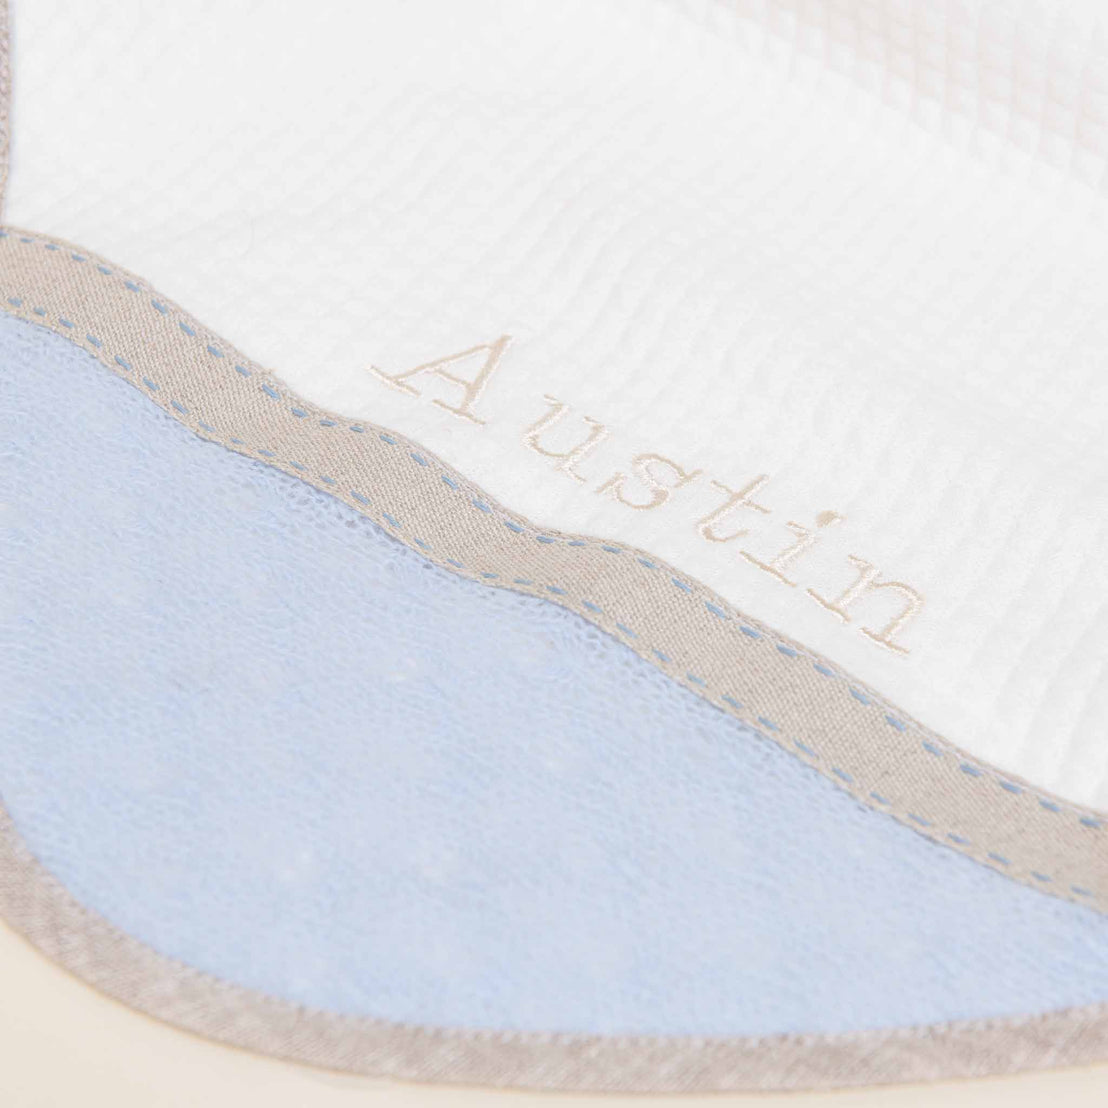 Austin Newborn Gift Set - Save 10%